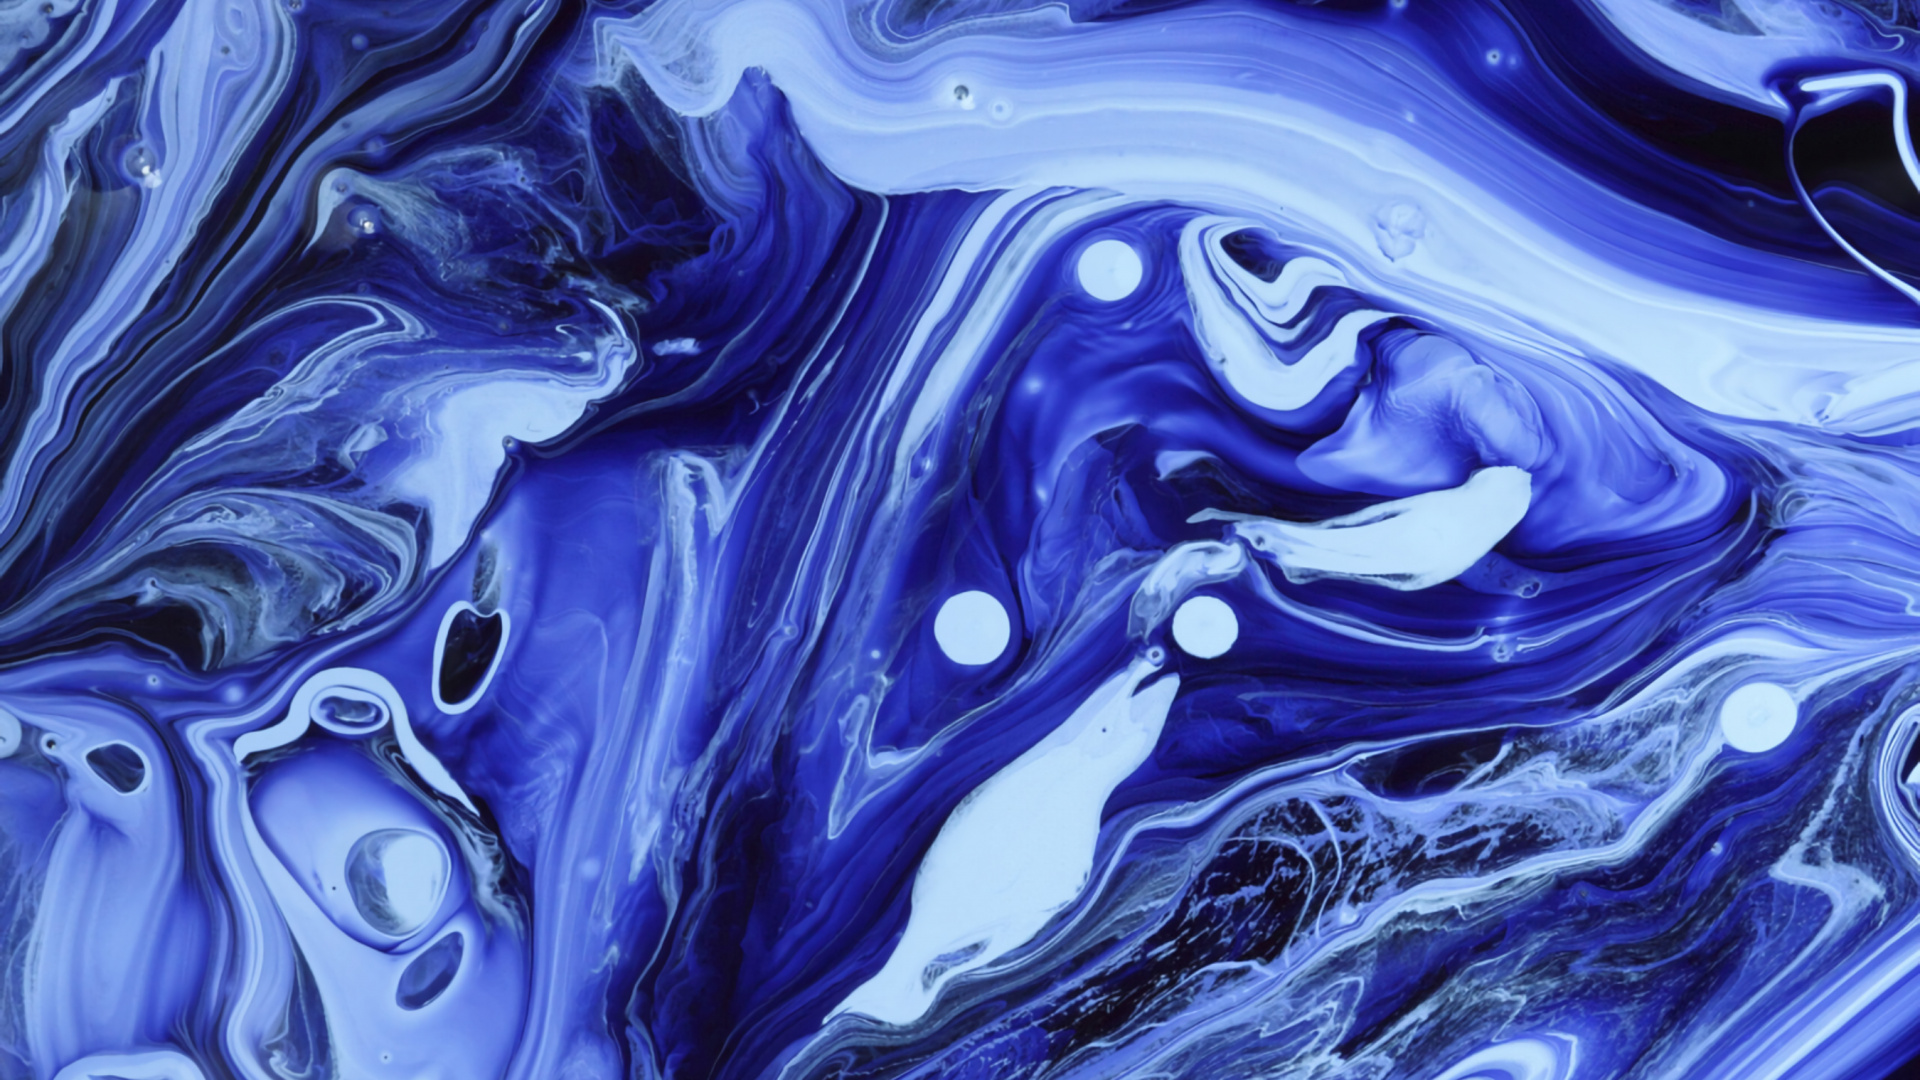 Water Drops on Blue Water. Wallpaper in 1920x1080 Resolution